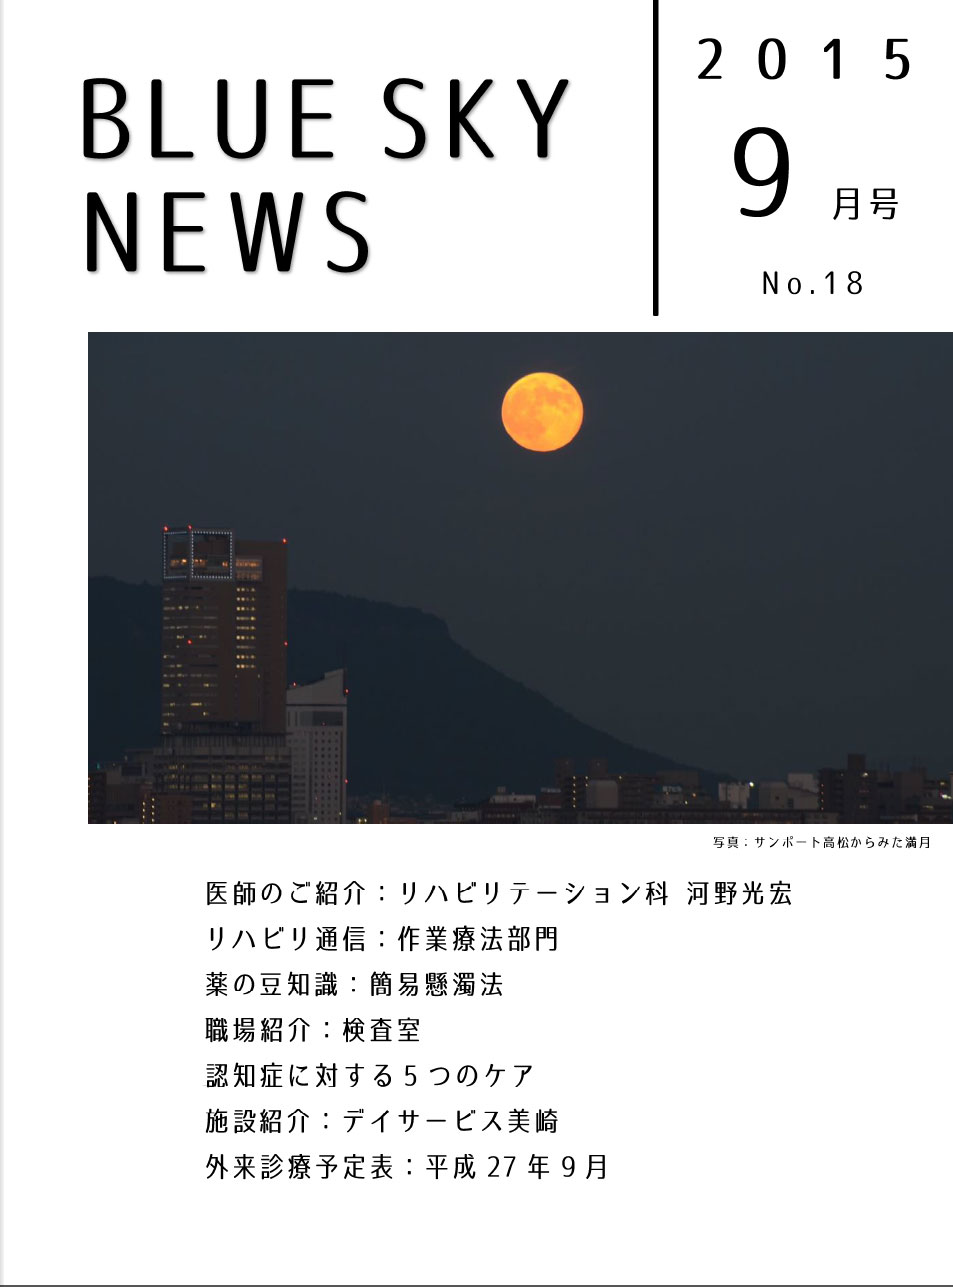 BLUE SKY NEWS 9月号発行しました。